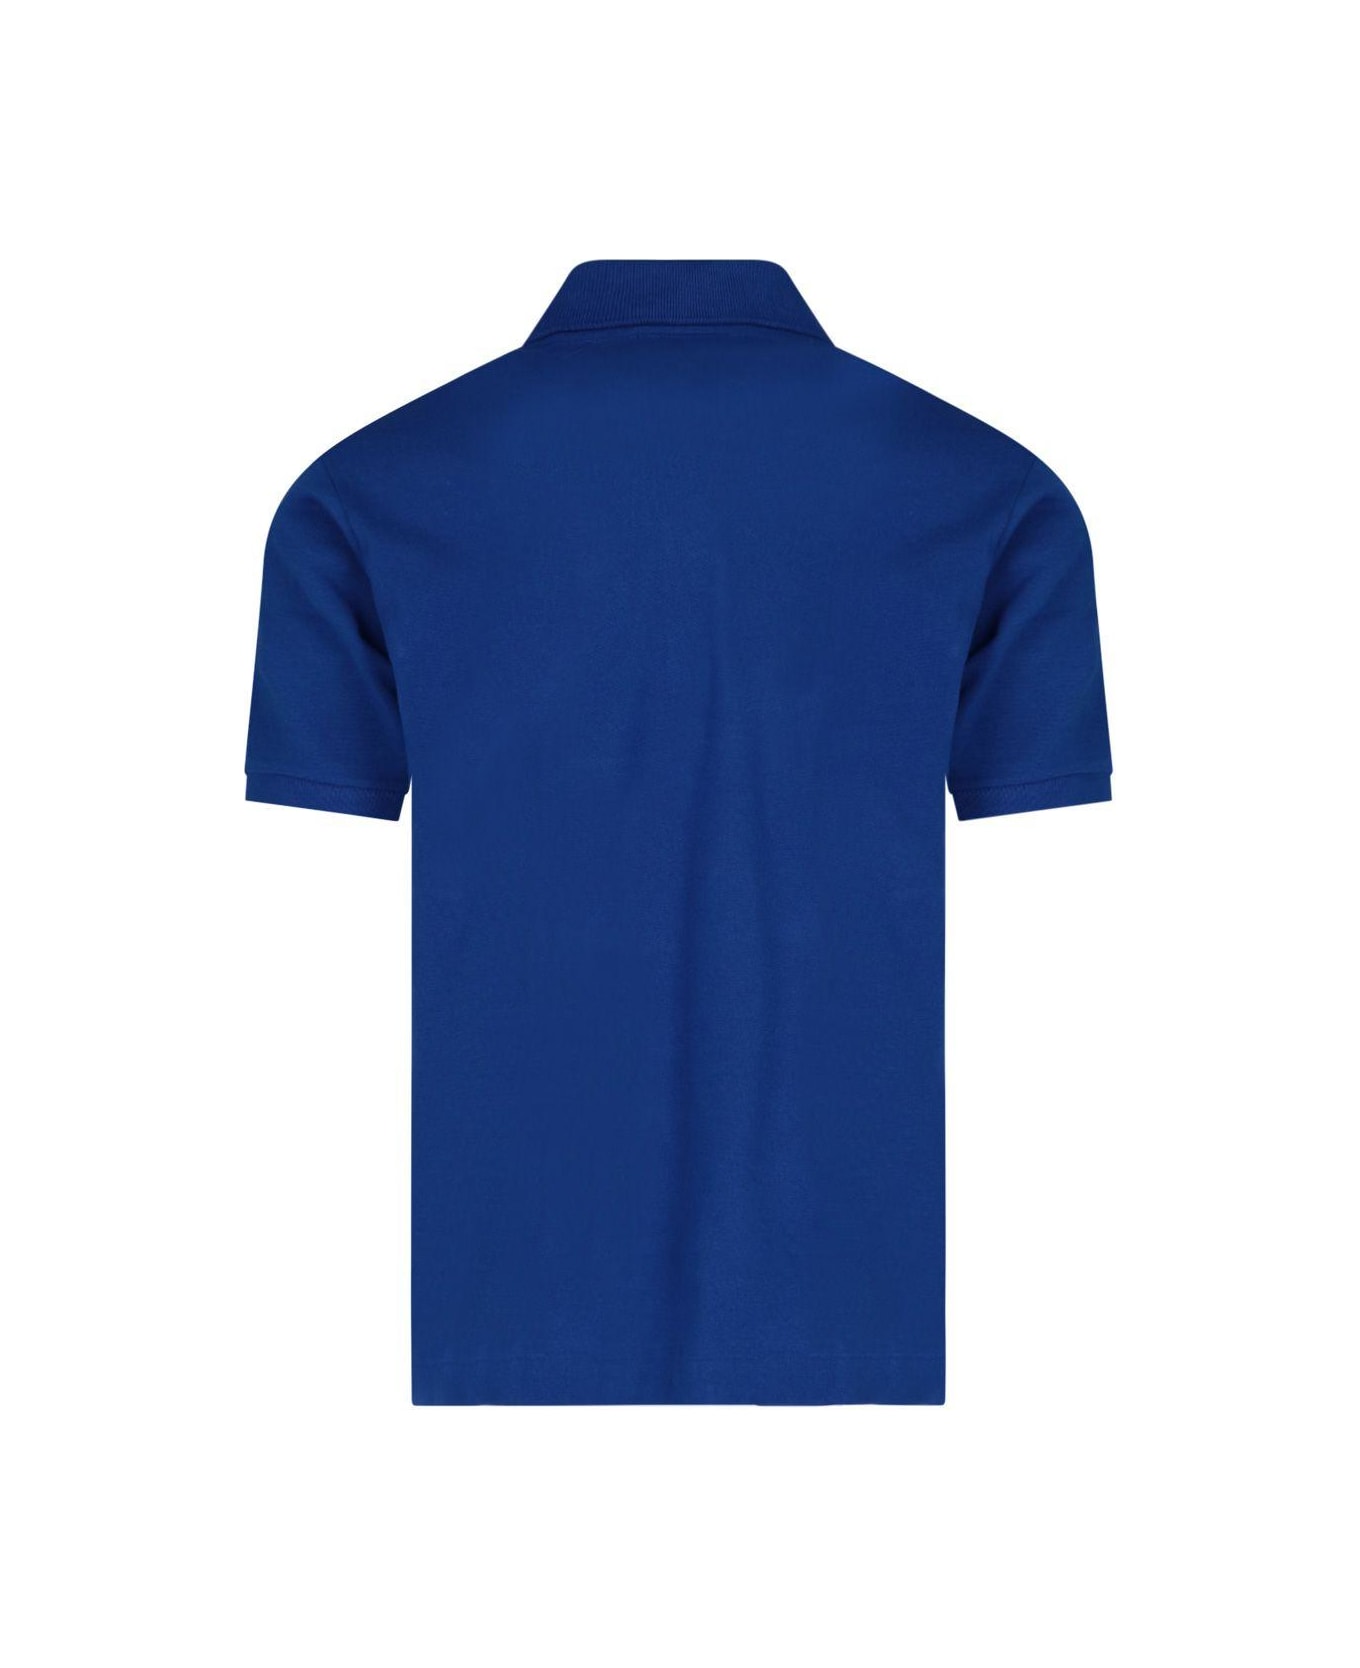 Lacoste Classic Design Colosseum Polo Shirt - Blue